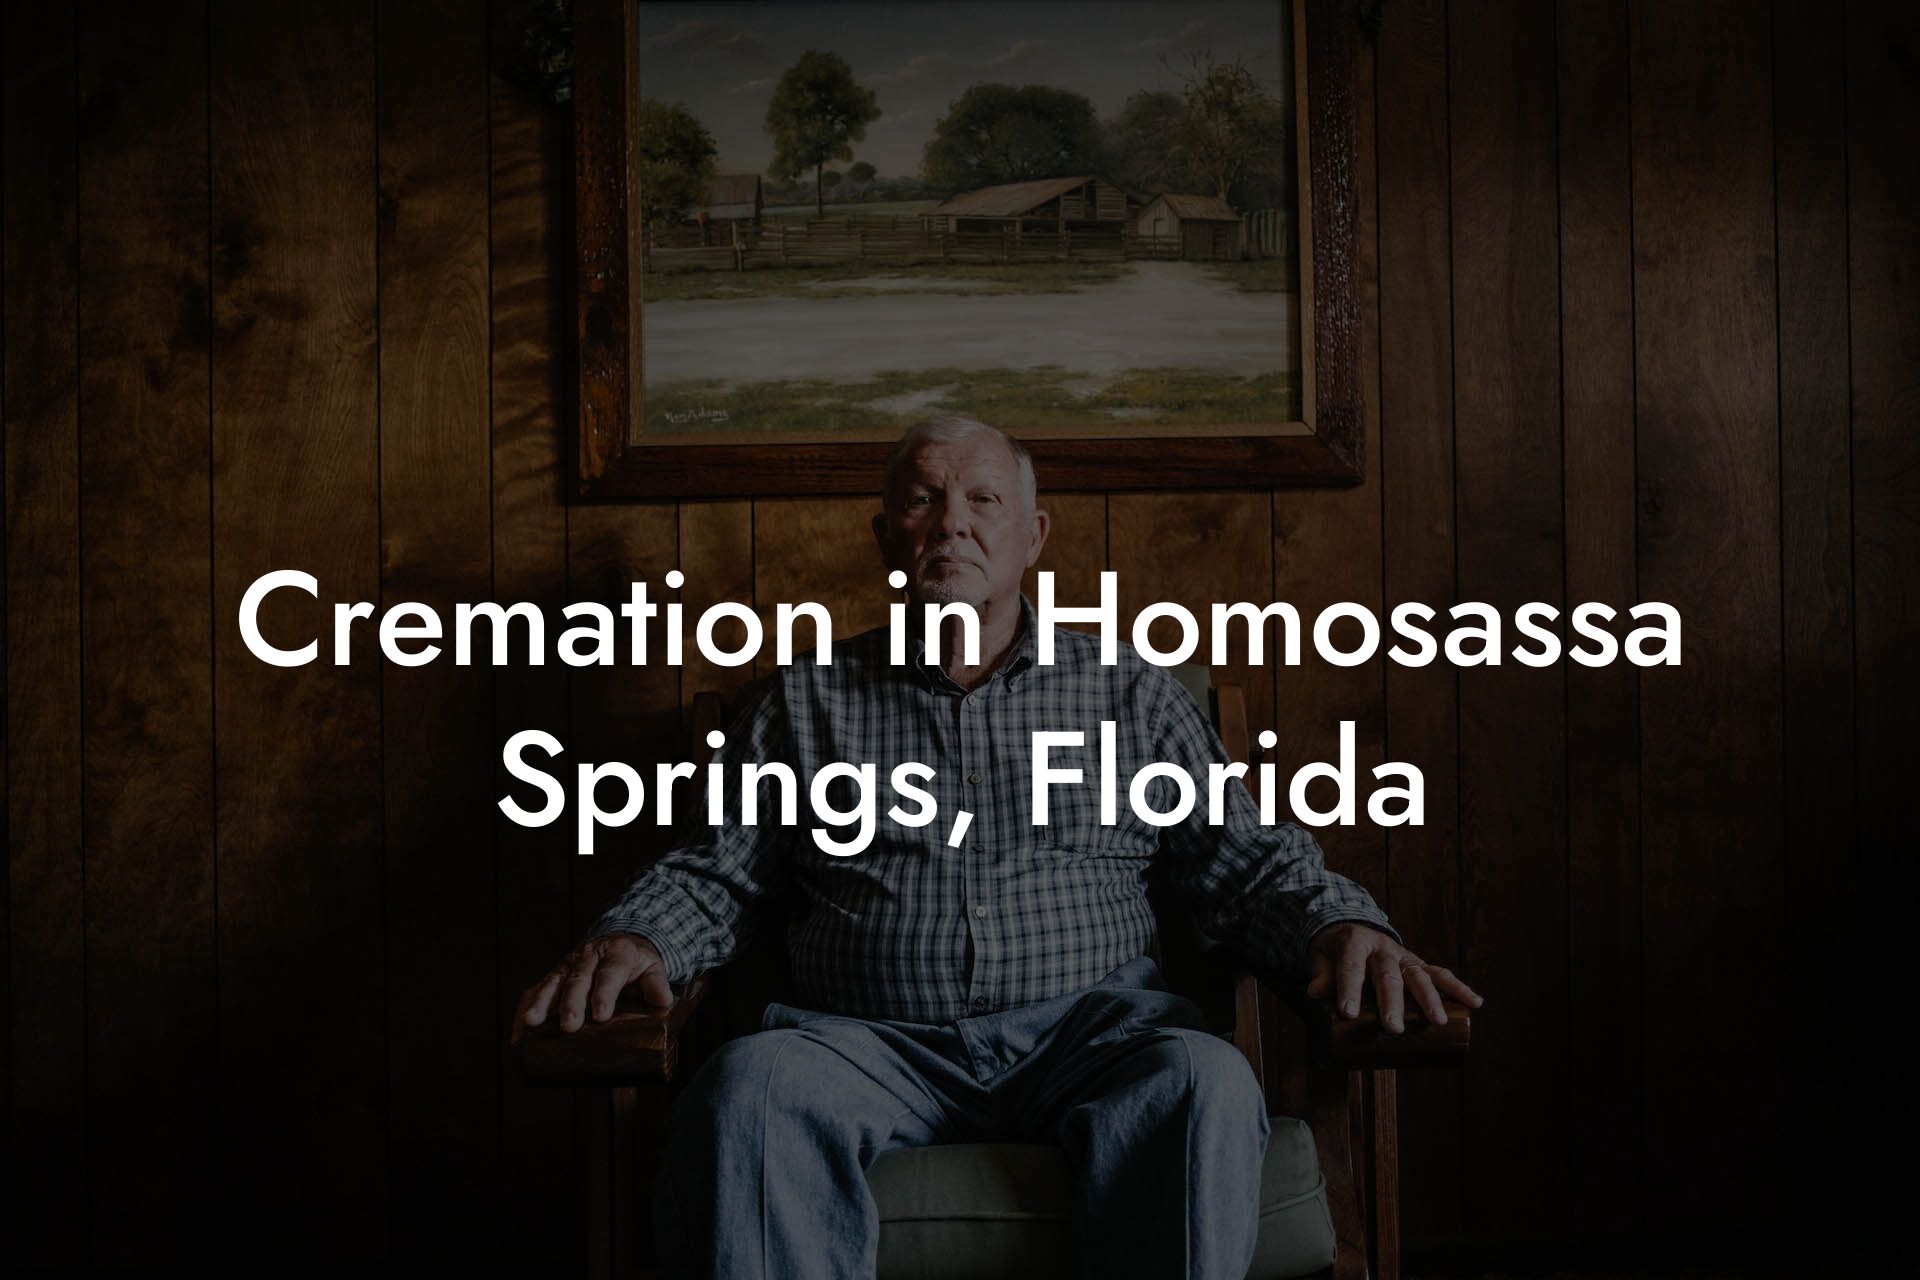 Cremation in Homosassa Springs, Florida